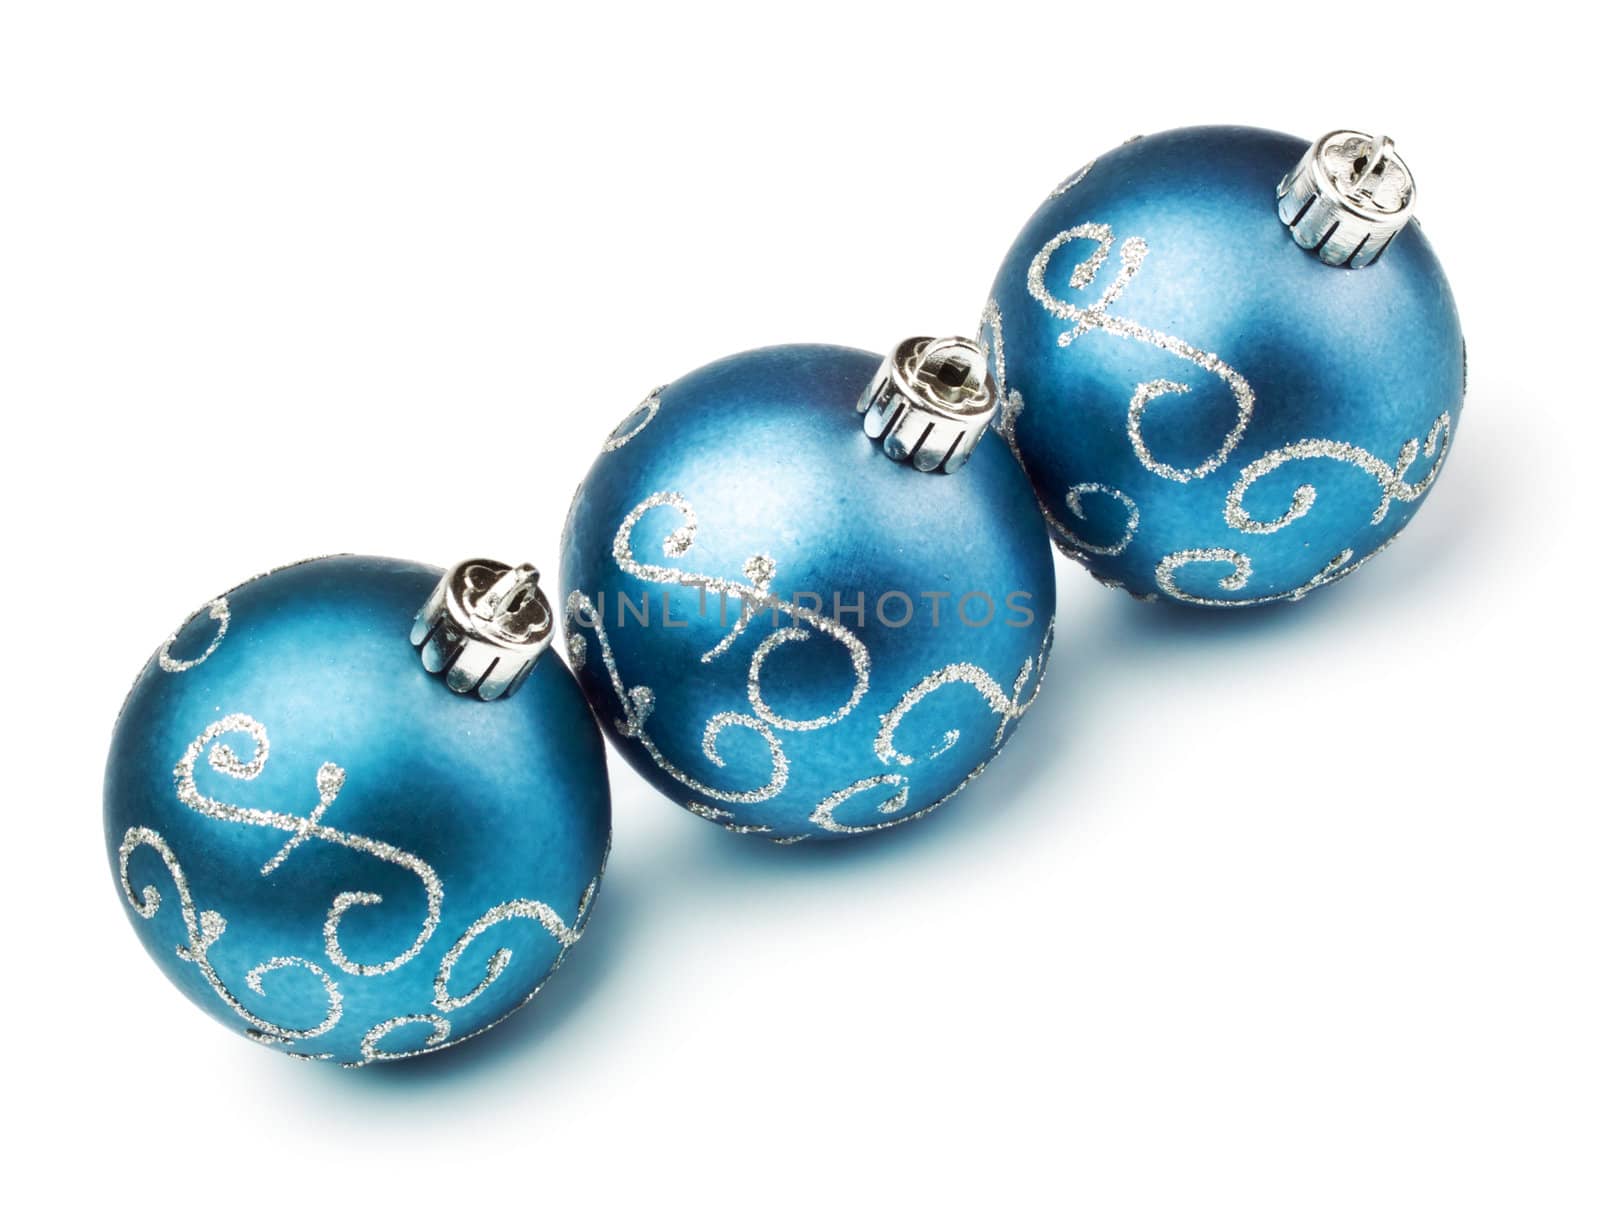 three blue decoration balls by petr_malyshev